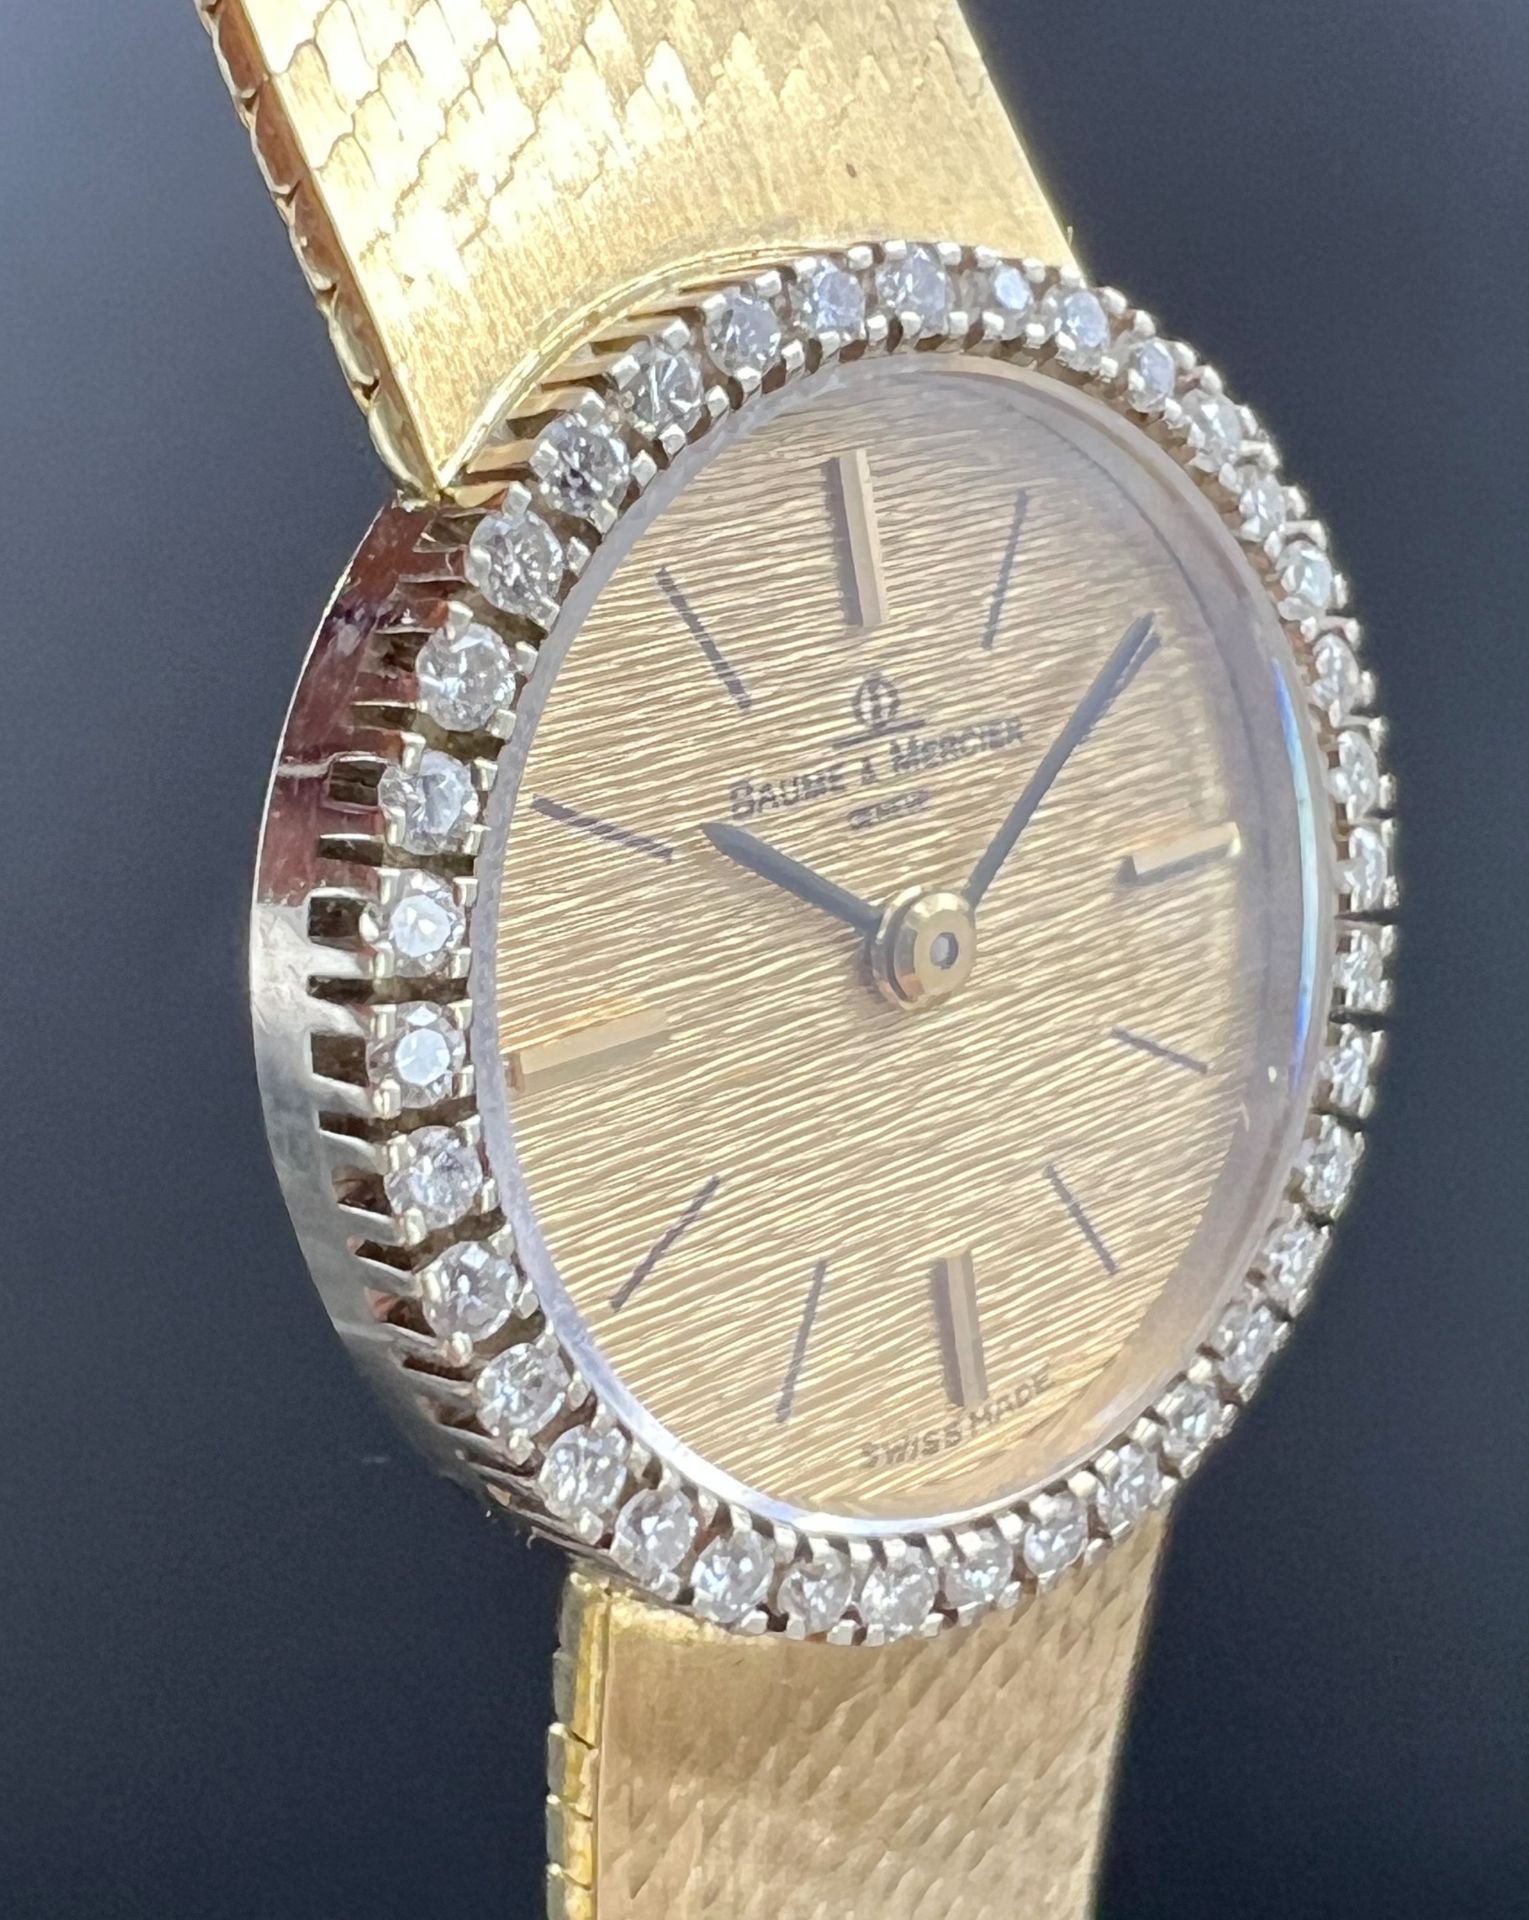 Baumen & Mercier ladies' wristwatch. 750 yellow gold with diamonds. - Image 3 of 8